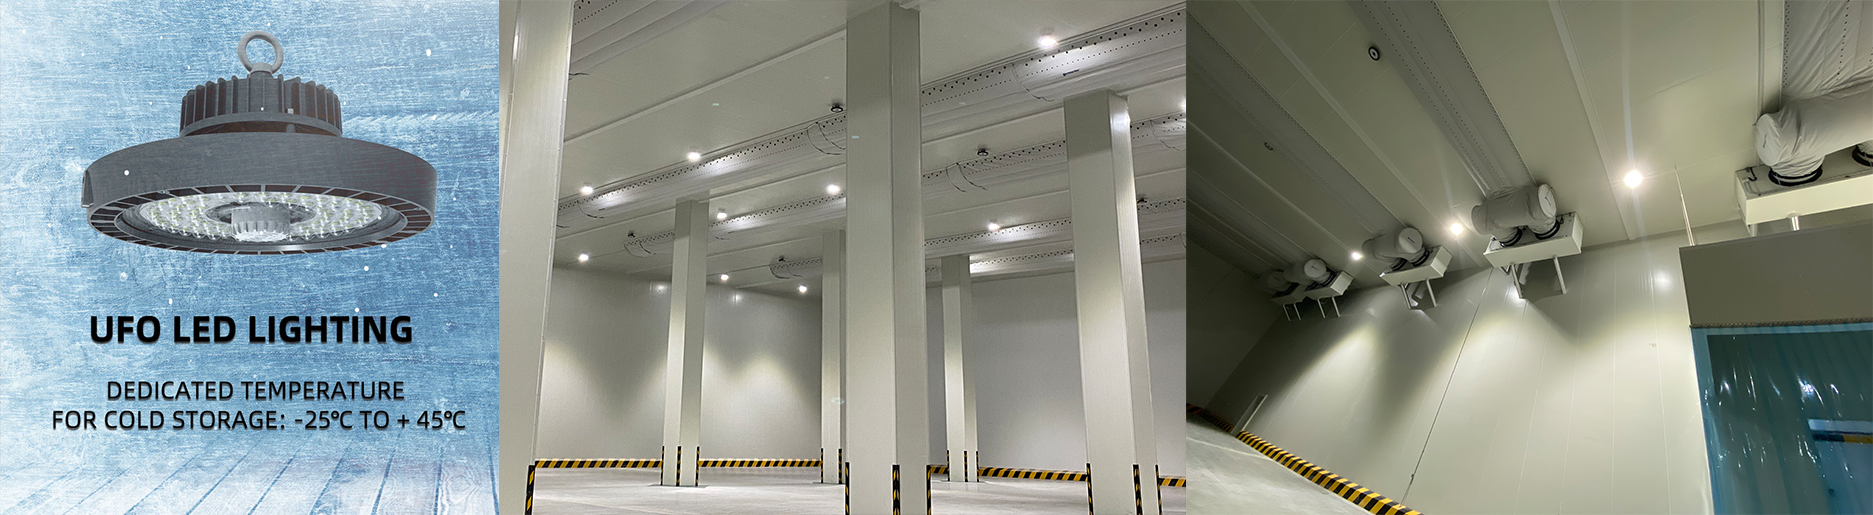 How to choose a high-quality cold storage lighting? | LEDRHYTHM